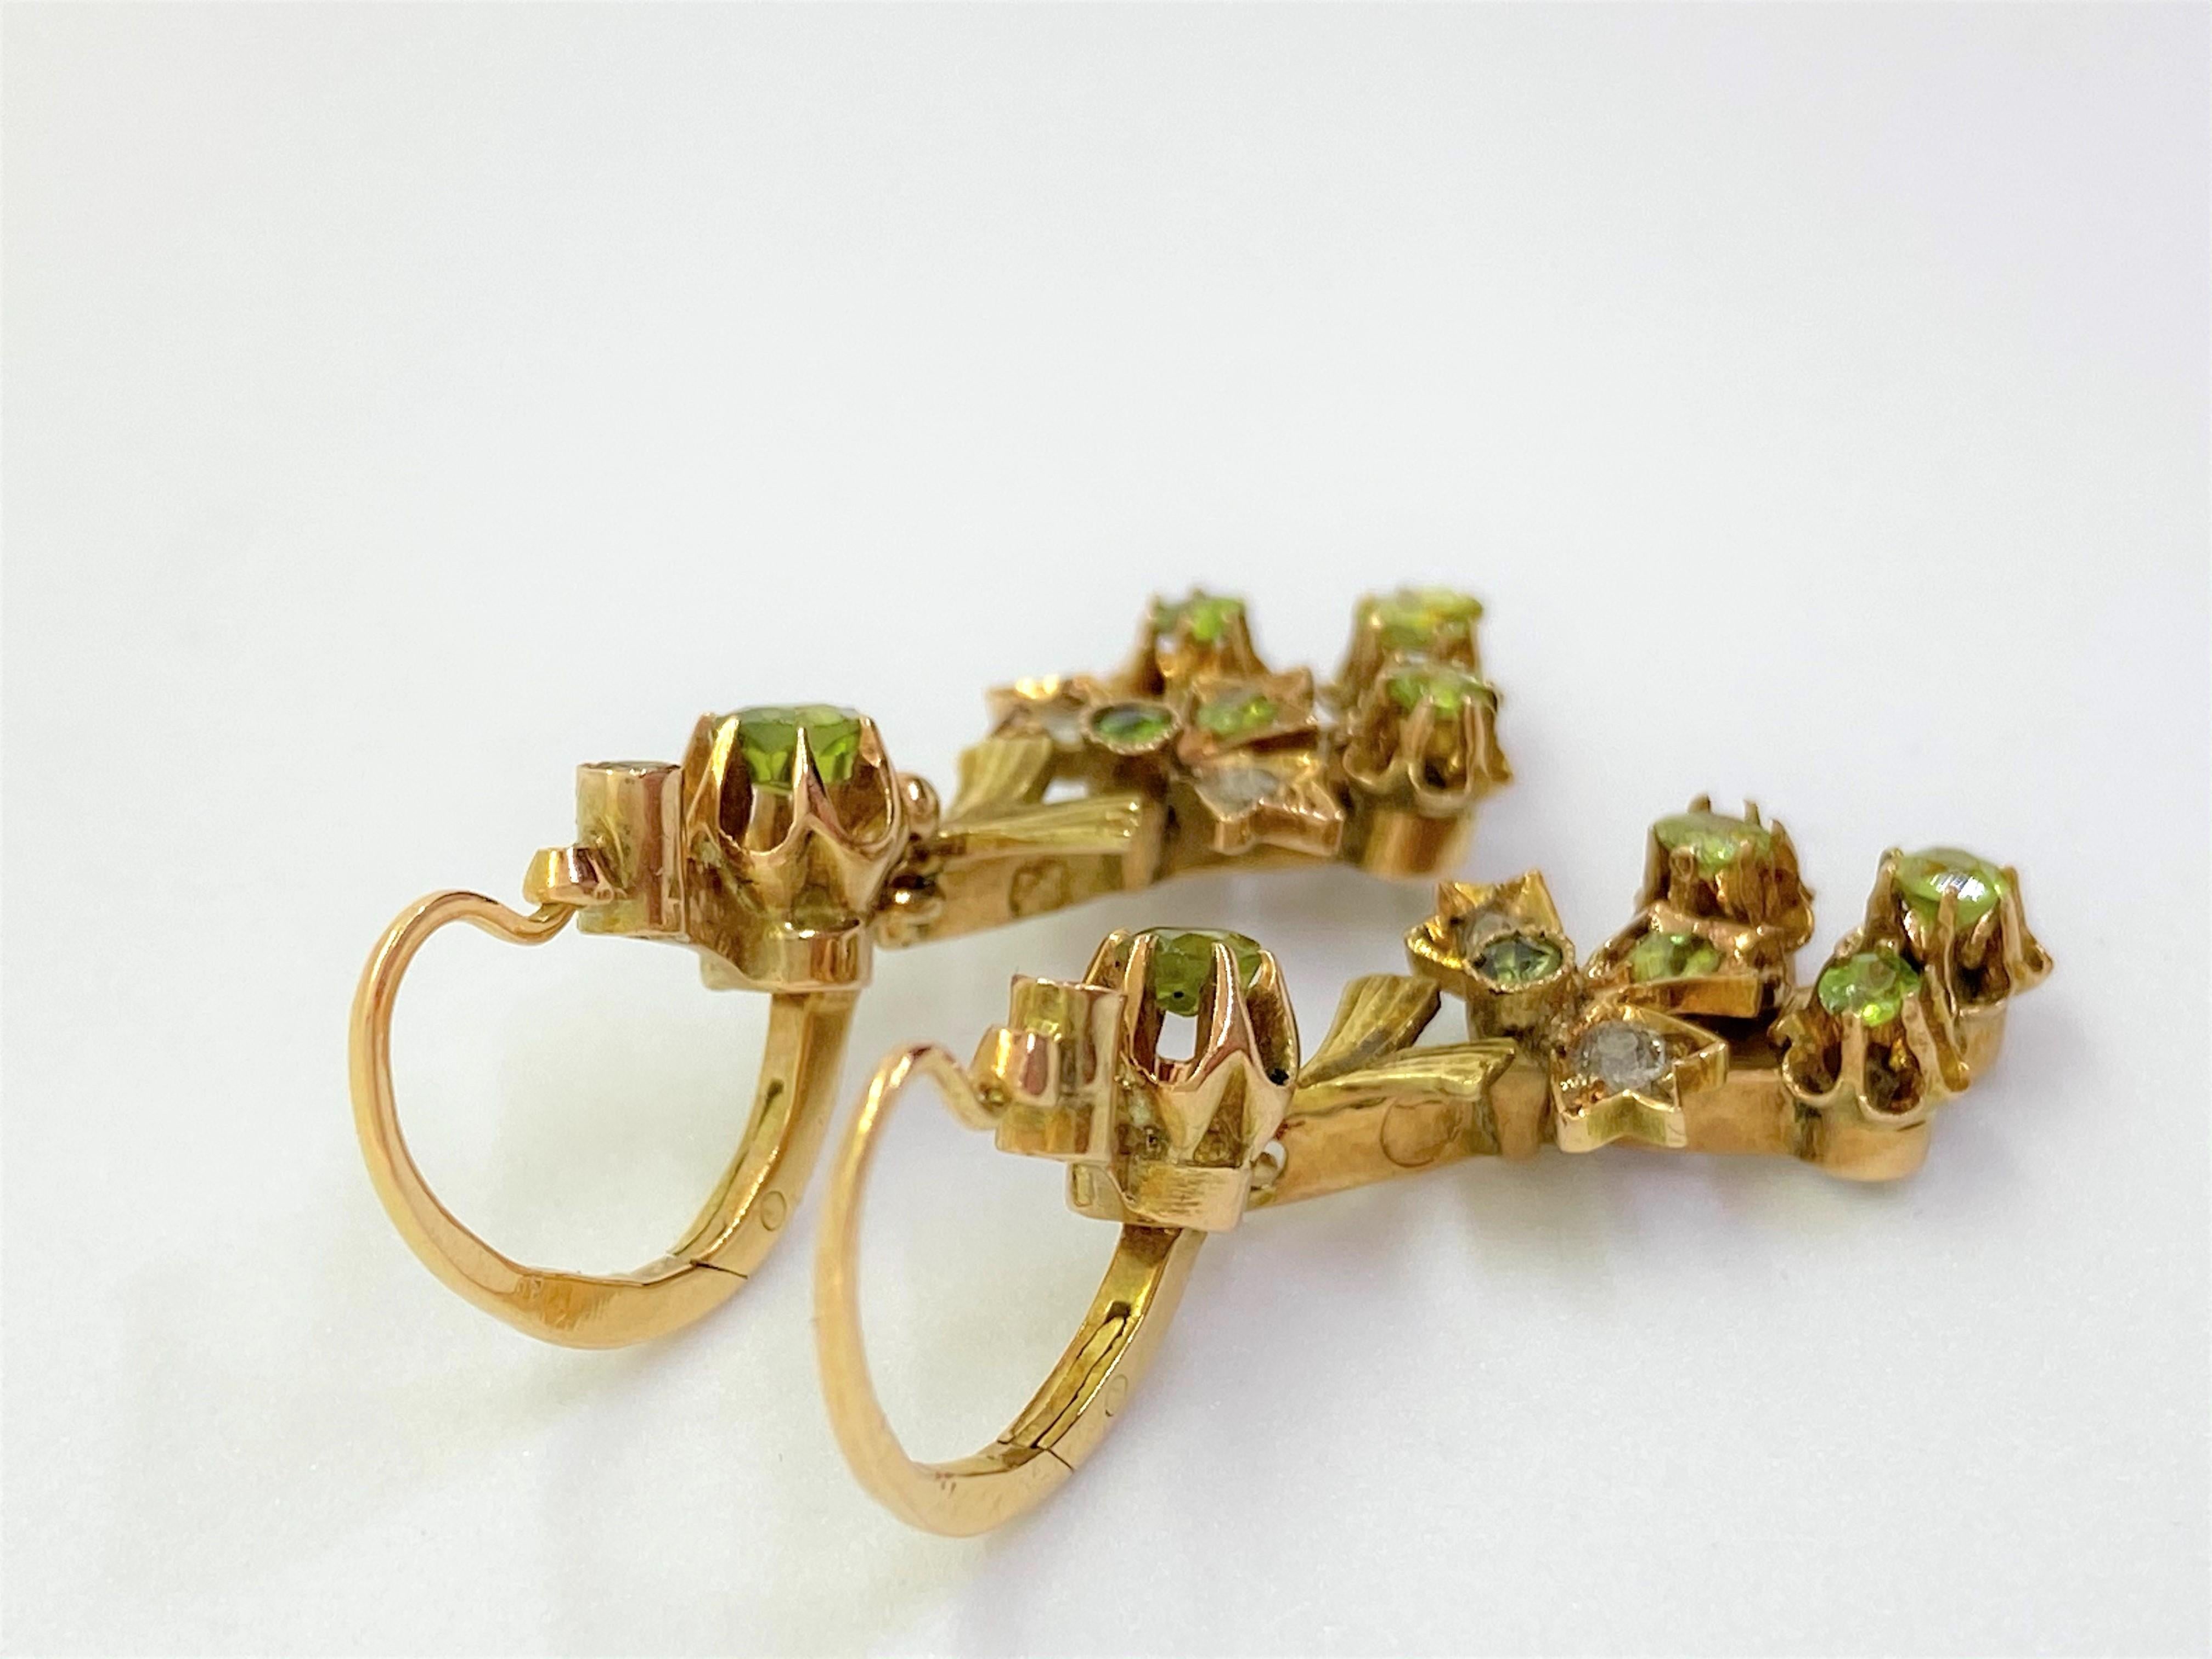 14 Karat Yellow Gold Demantoid Garnet Rosecut Diamond Earrings
Width 1.1 cm, Length 3.5 cm, Depth 1.3cm
14k gold, Russian gold stamp 56
